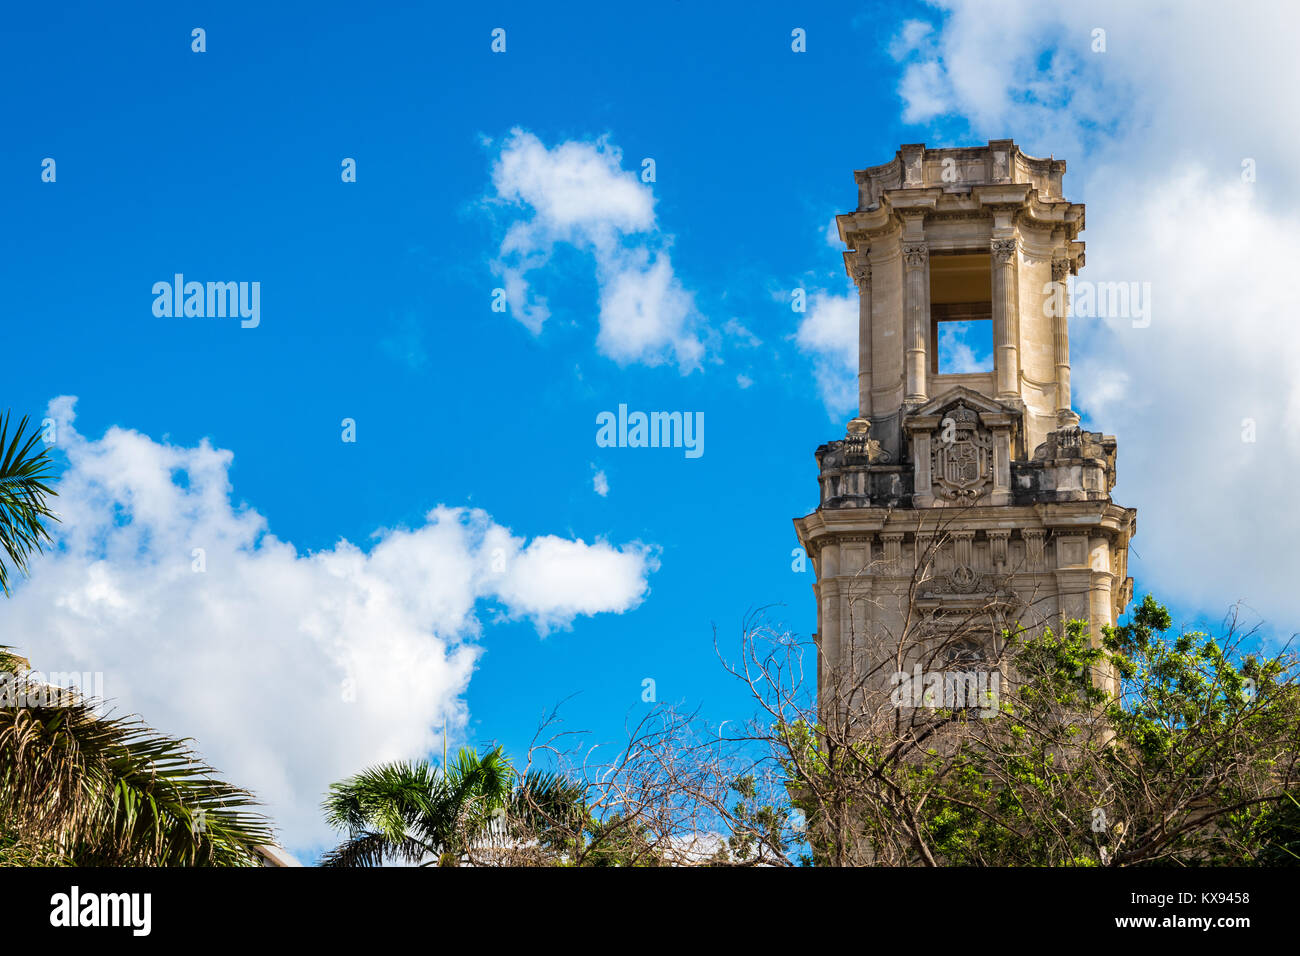 Historic monument building in la Havana Cuba Stock Photo